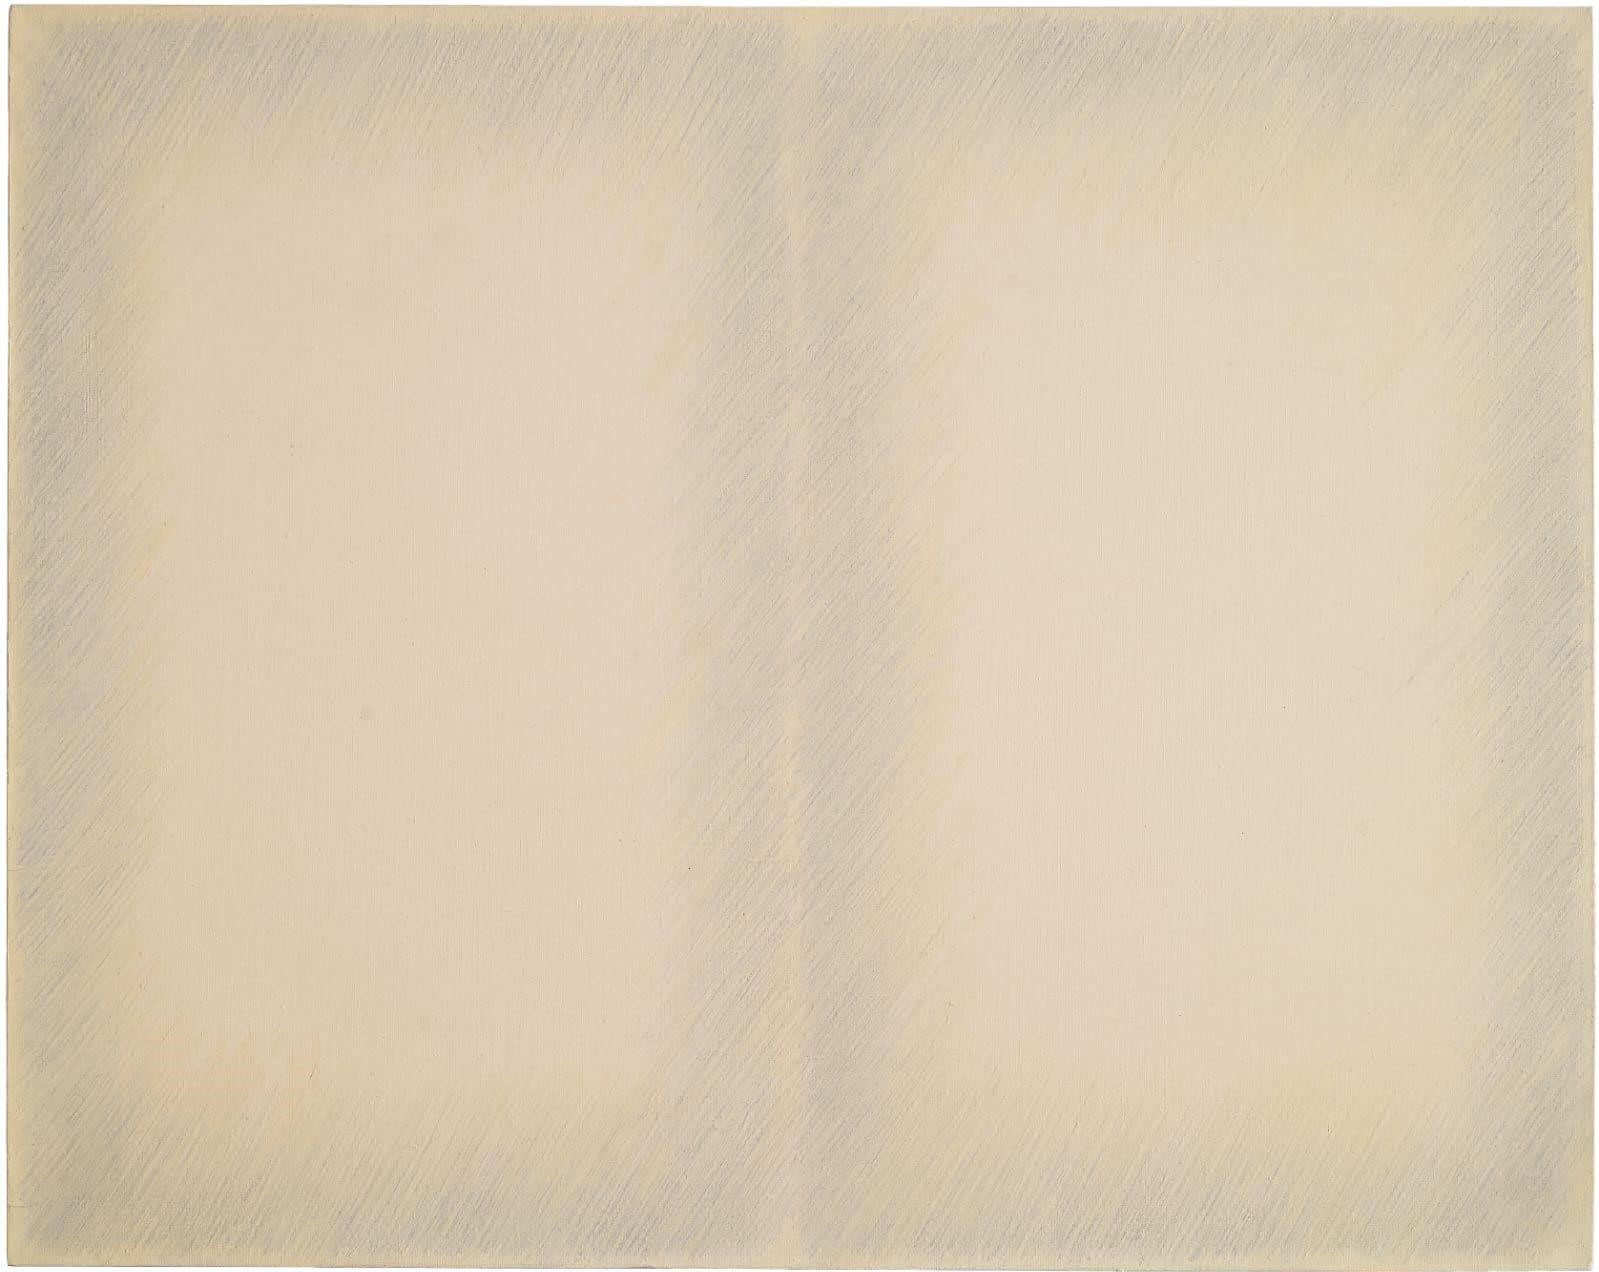 Park Seo-Bo – Ecriture No. 3-78, 1978, pencil, oil on canvas, 130 x 162 cm